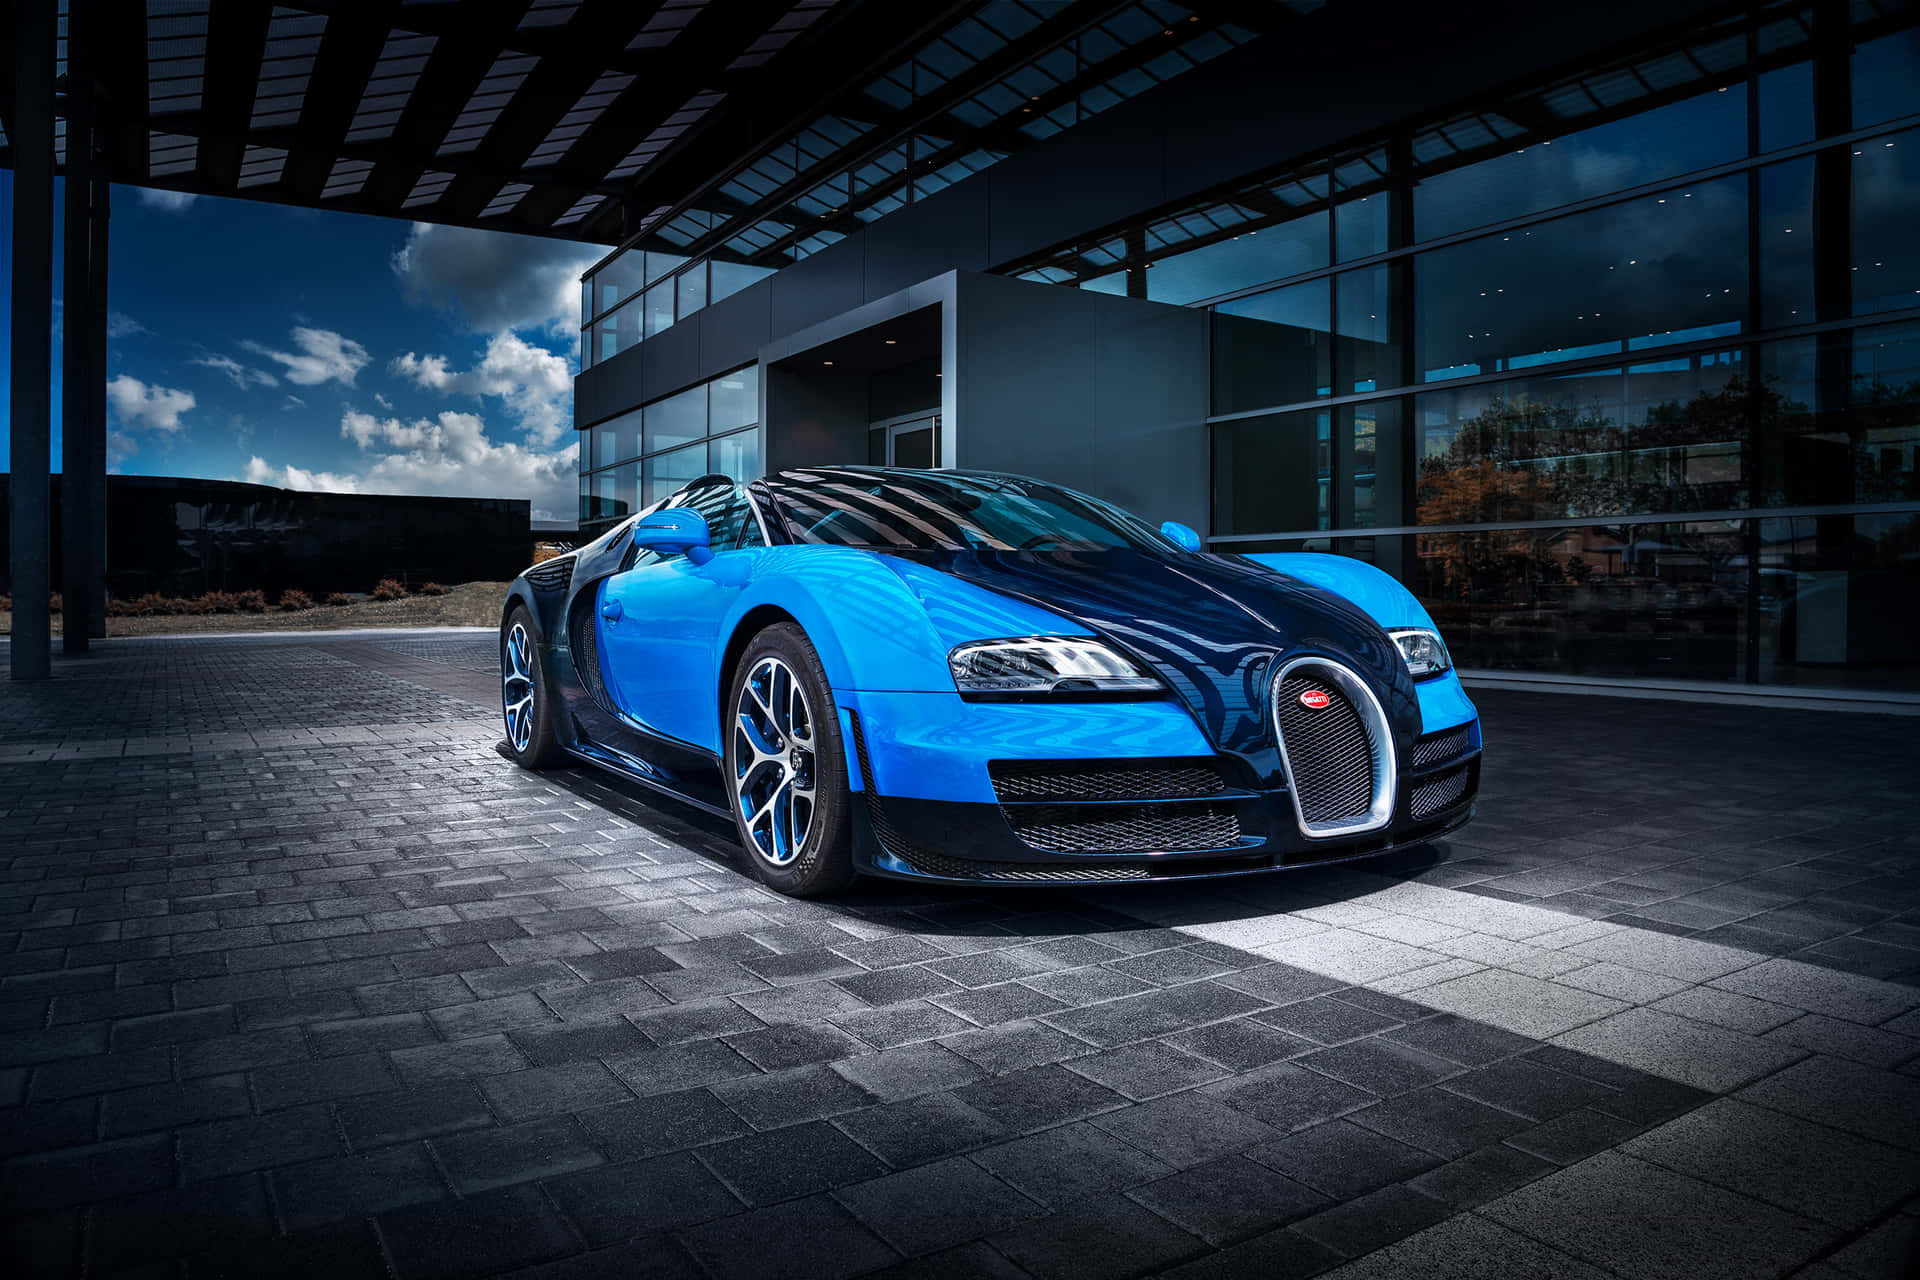 "Feel the powerful energy of this amazing Neon Bugatti!" Wallpaper